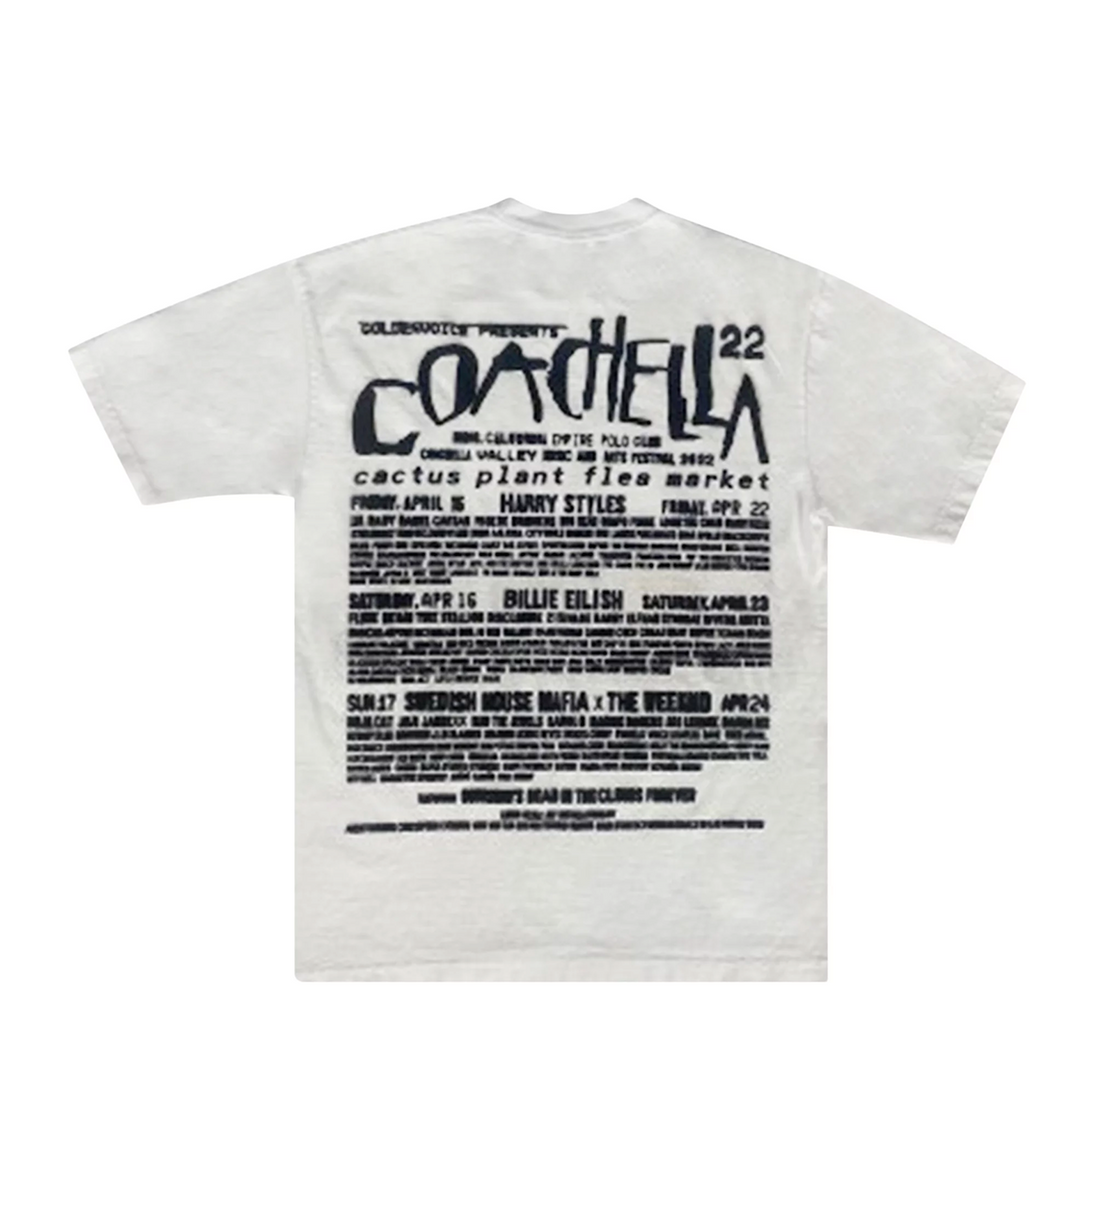 Coachella x CPFM Tee Regular White